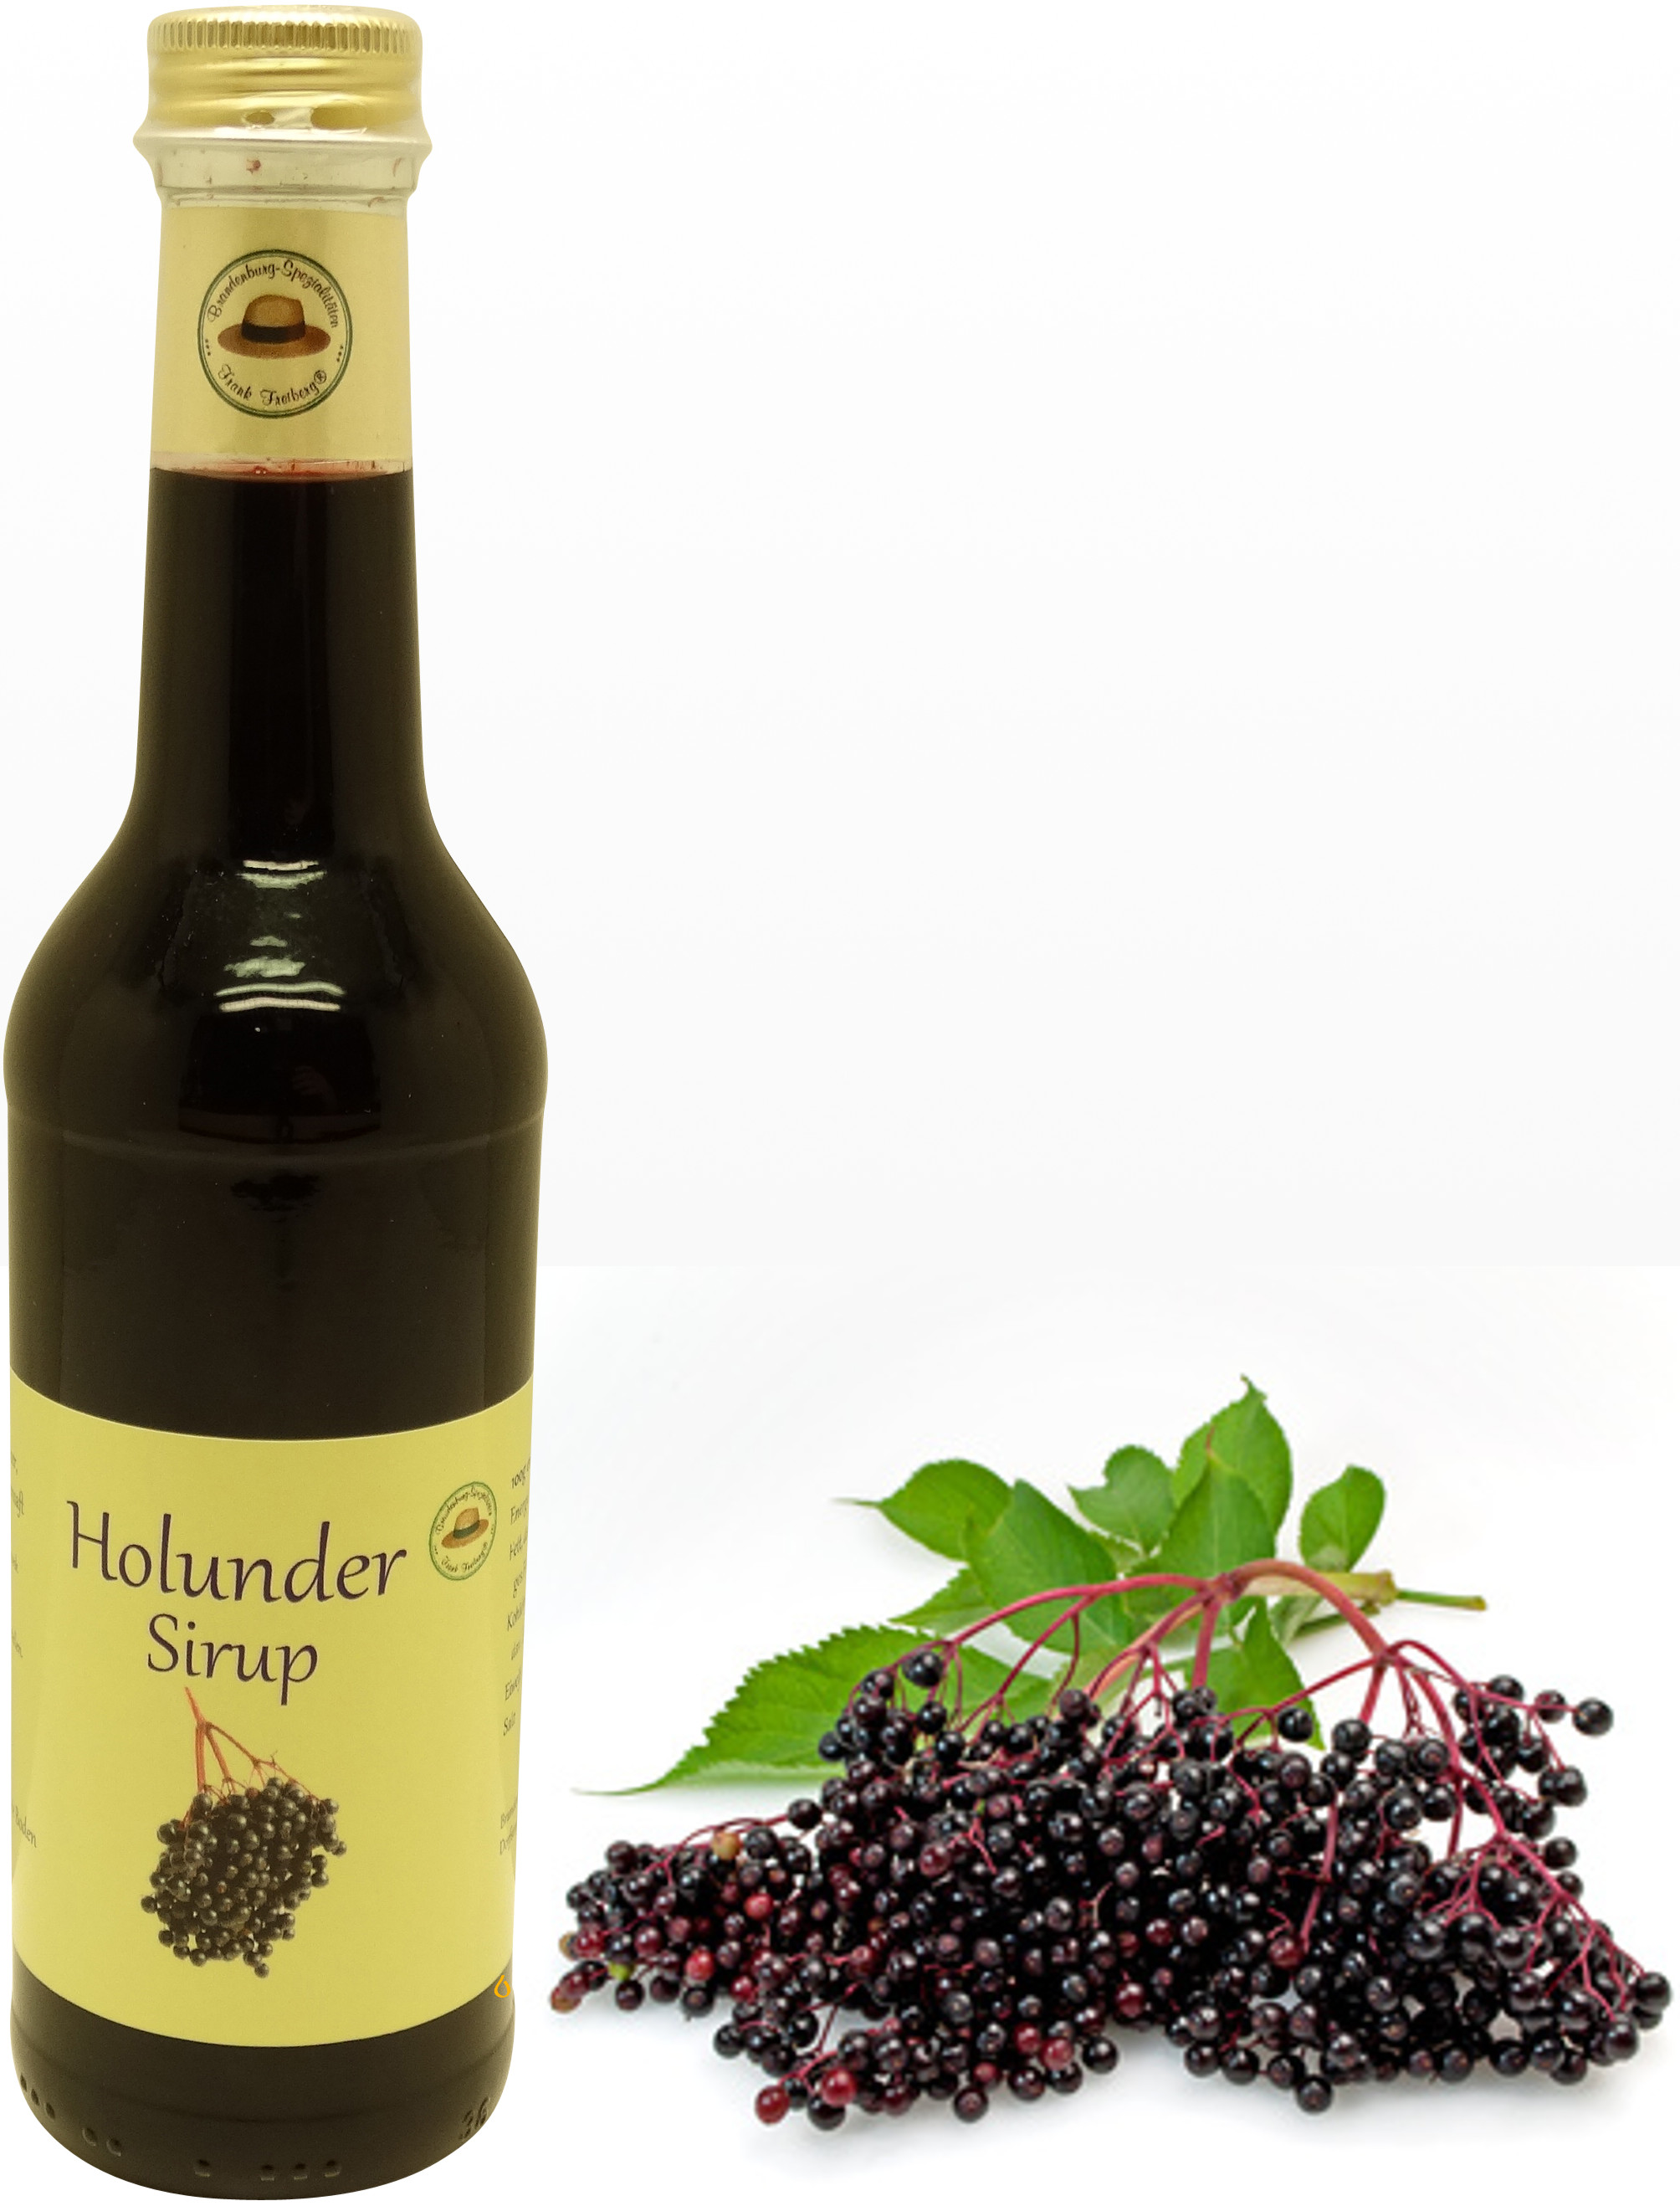 Fercher Holunder-Sirup | Fruchtsirupe | Feinkost | oelix.de - Öle mit ...